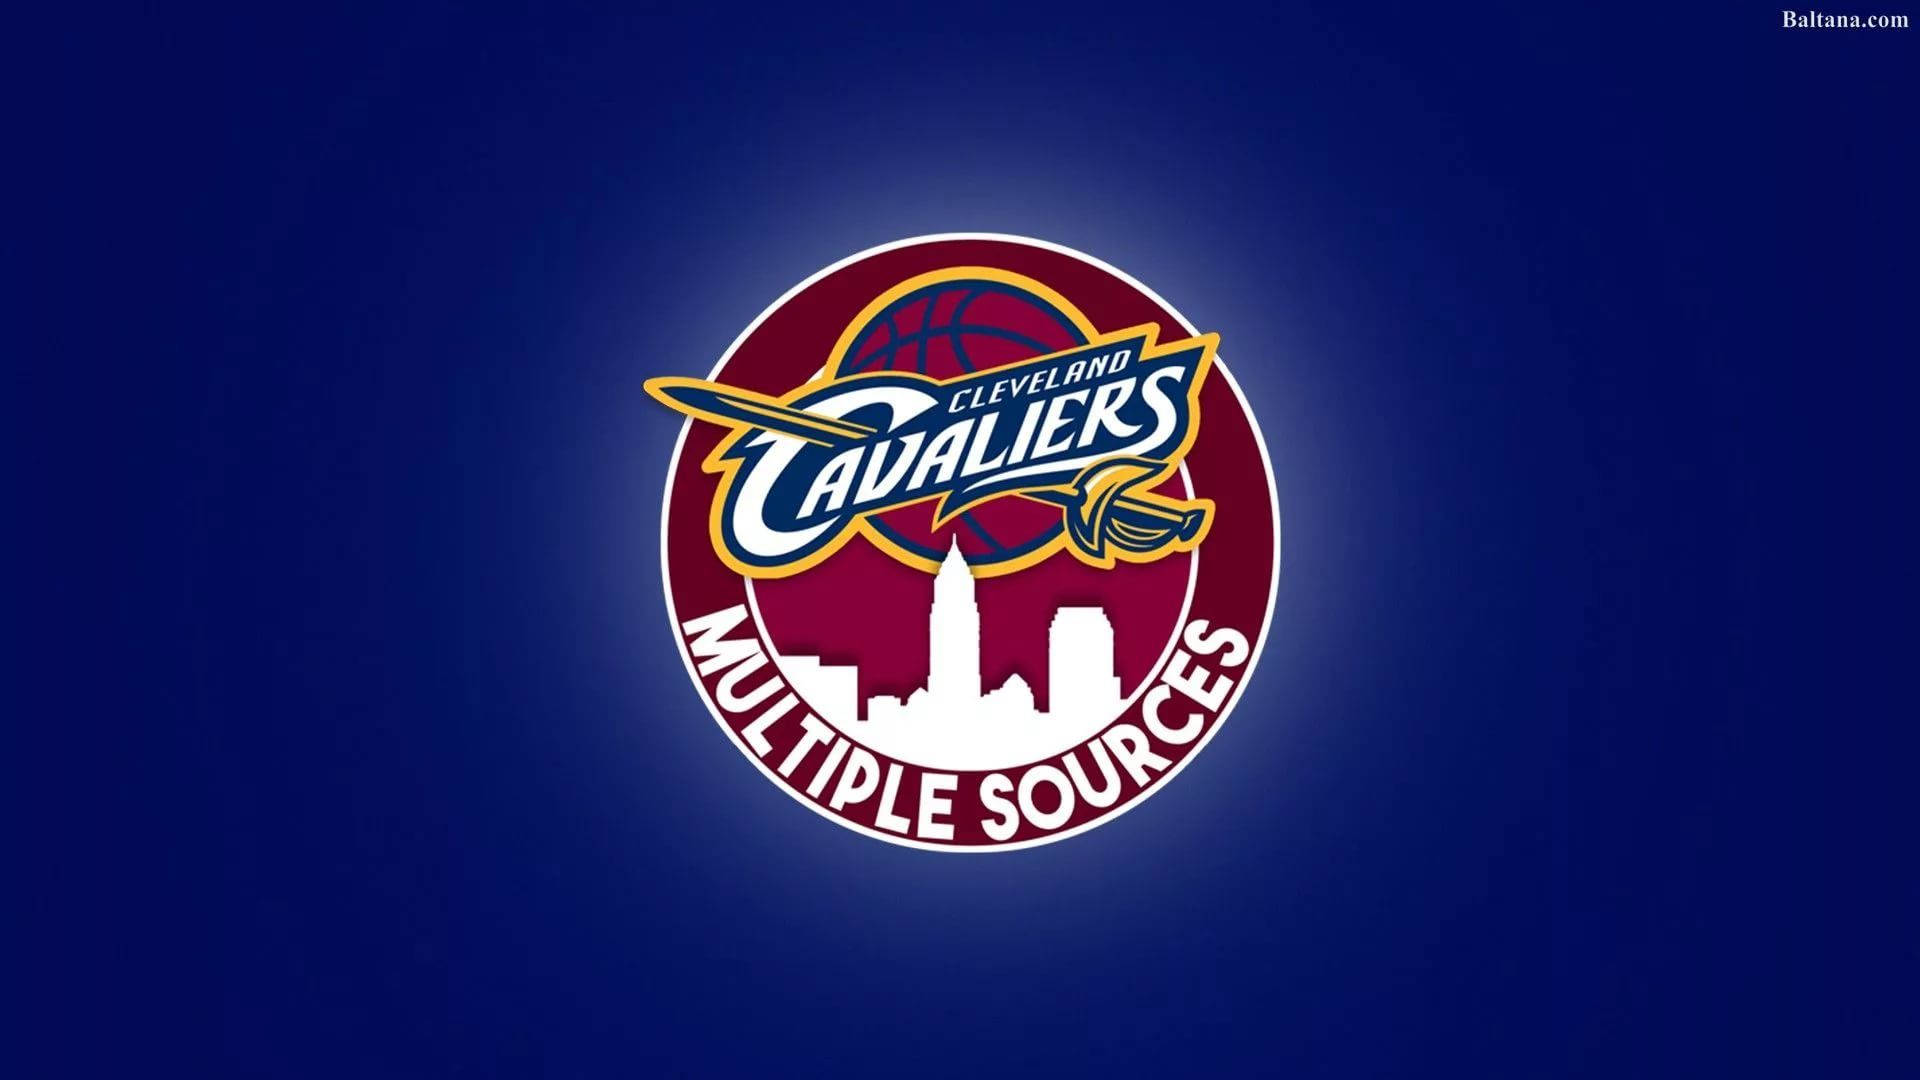 Logotipodo Contorno Da Cidade Do Cleveland Cavaliers. Papel de Parede